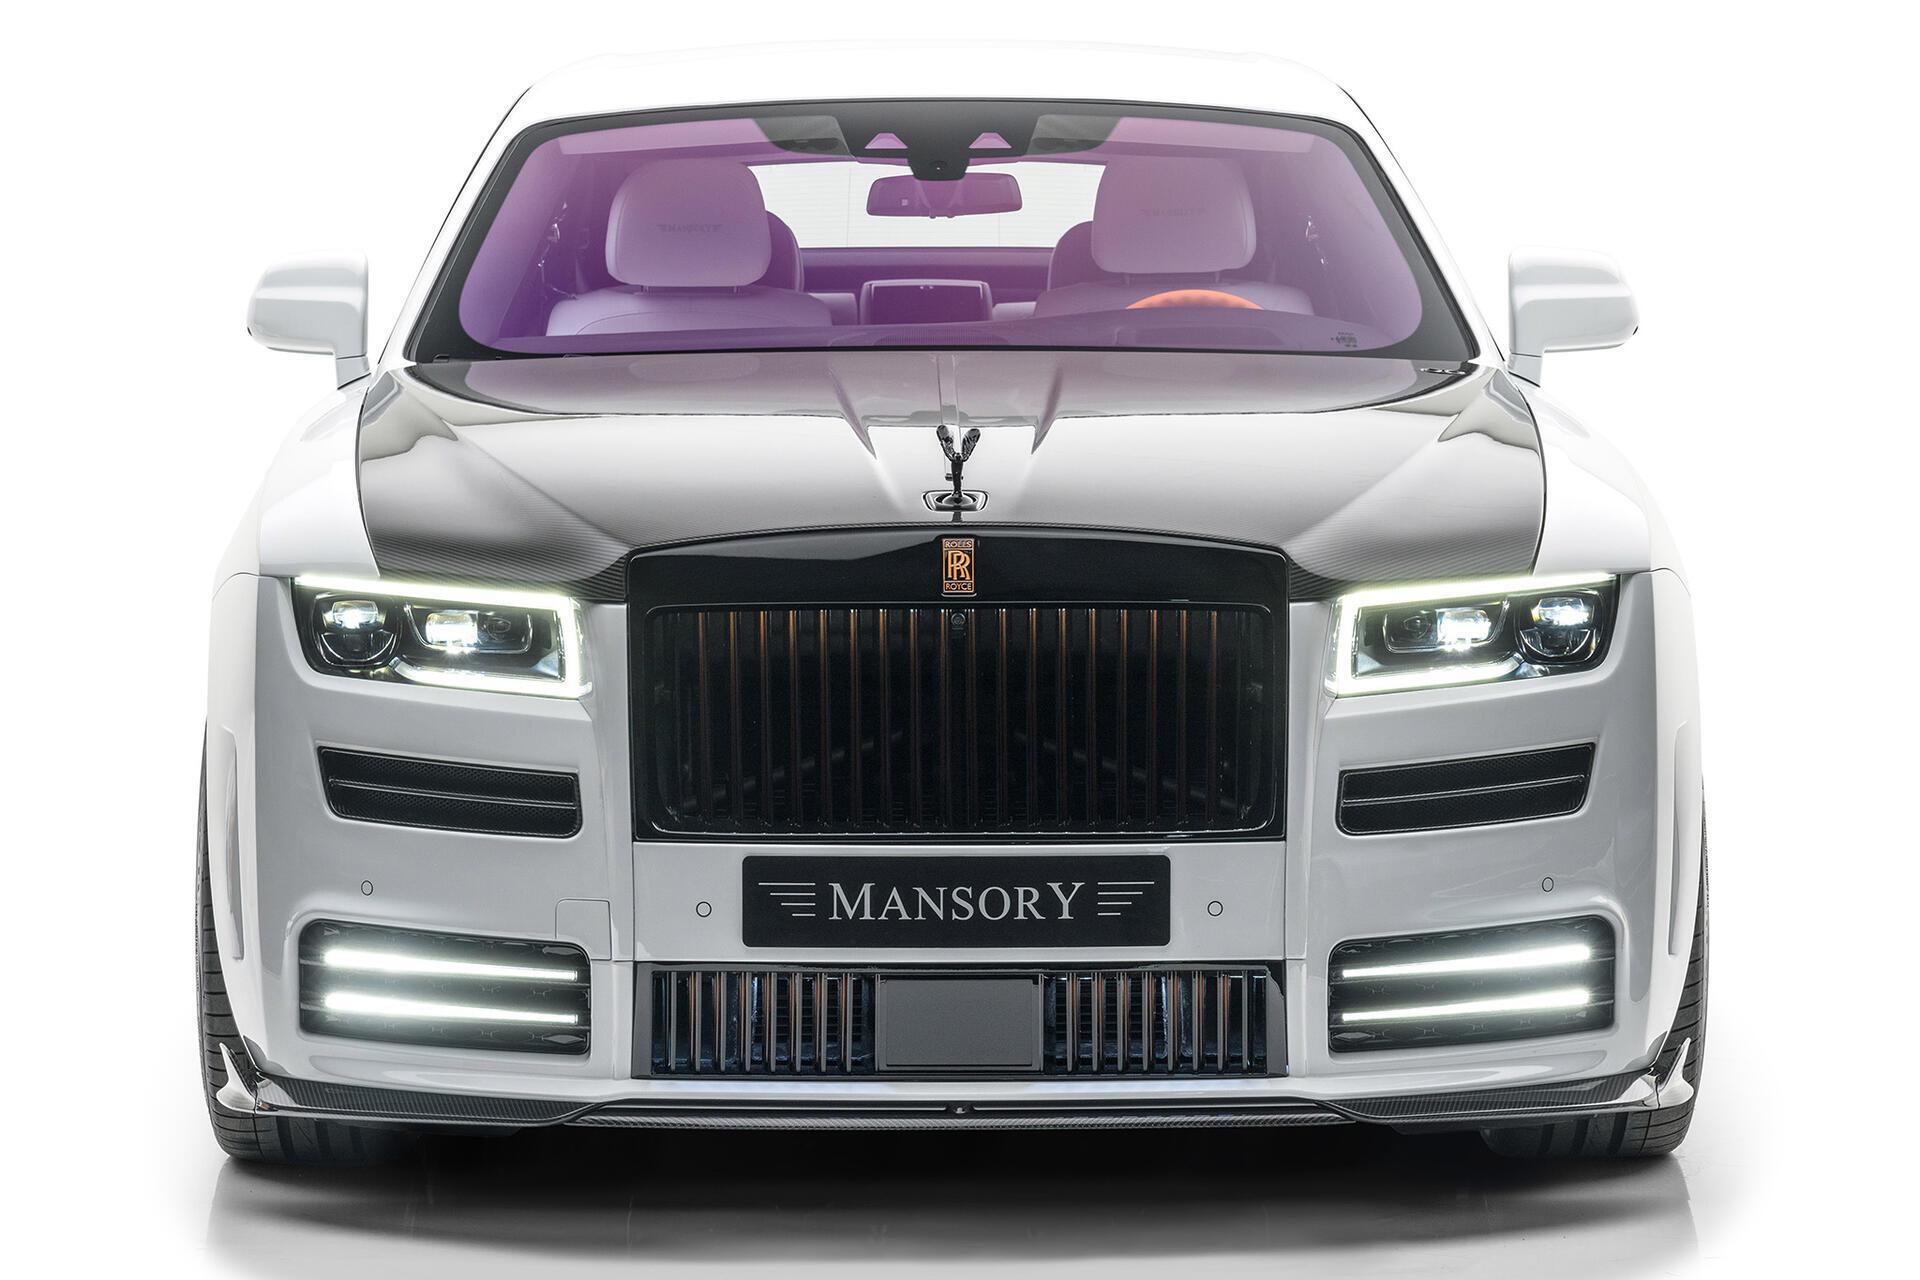 RollsRoyce Phantom Mansory 118 VMB  Black  